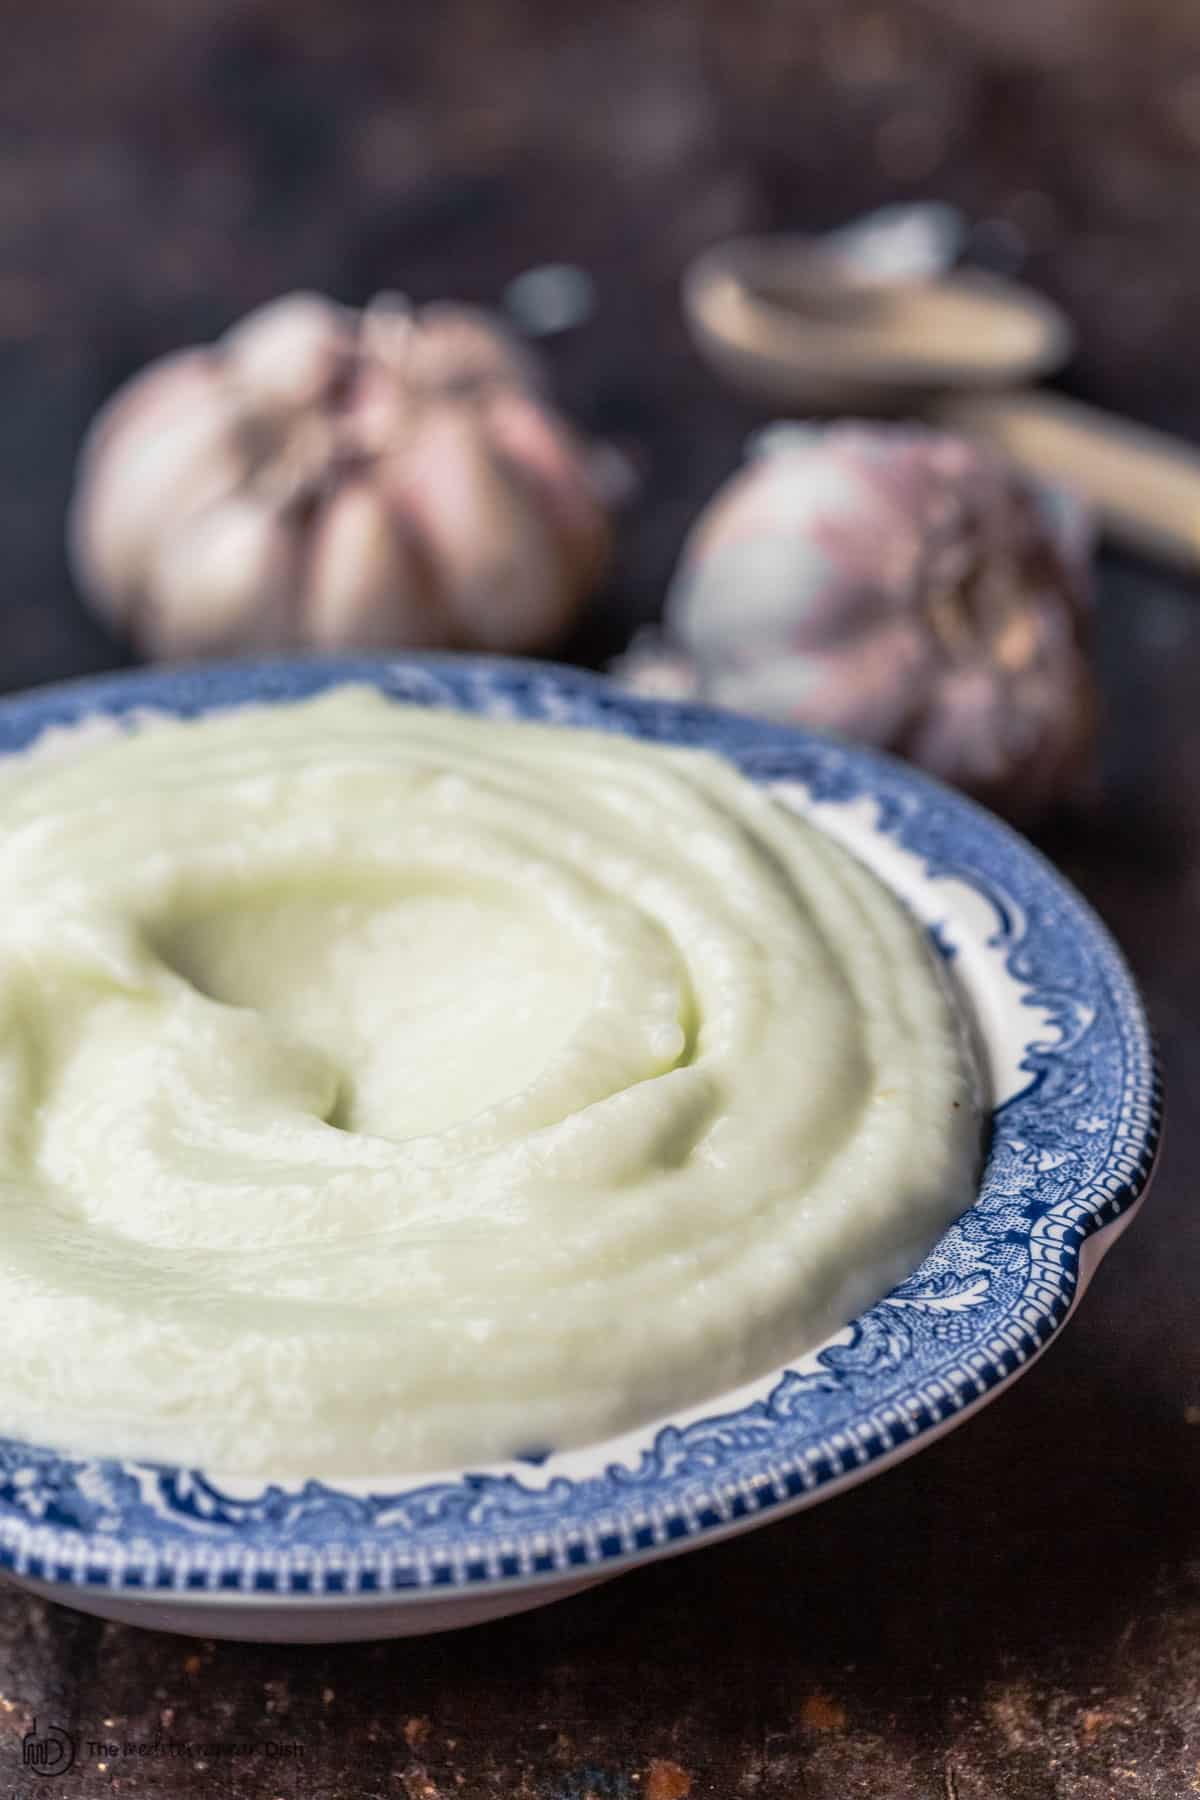 Garlic Master- Premium Quality Garlic Cutter, 1 - Food 4 Less